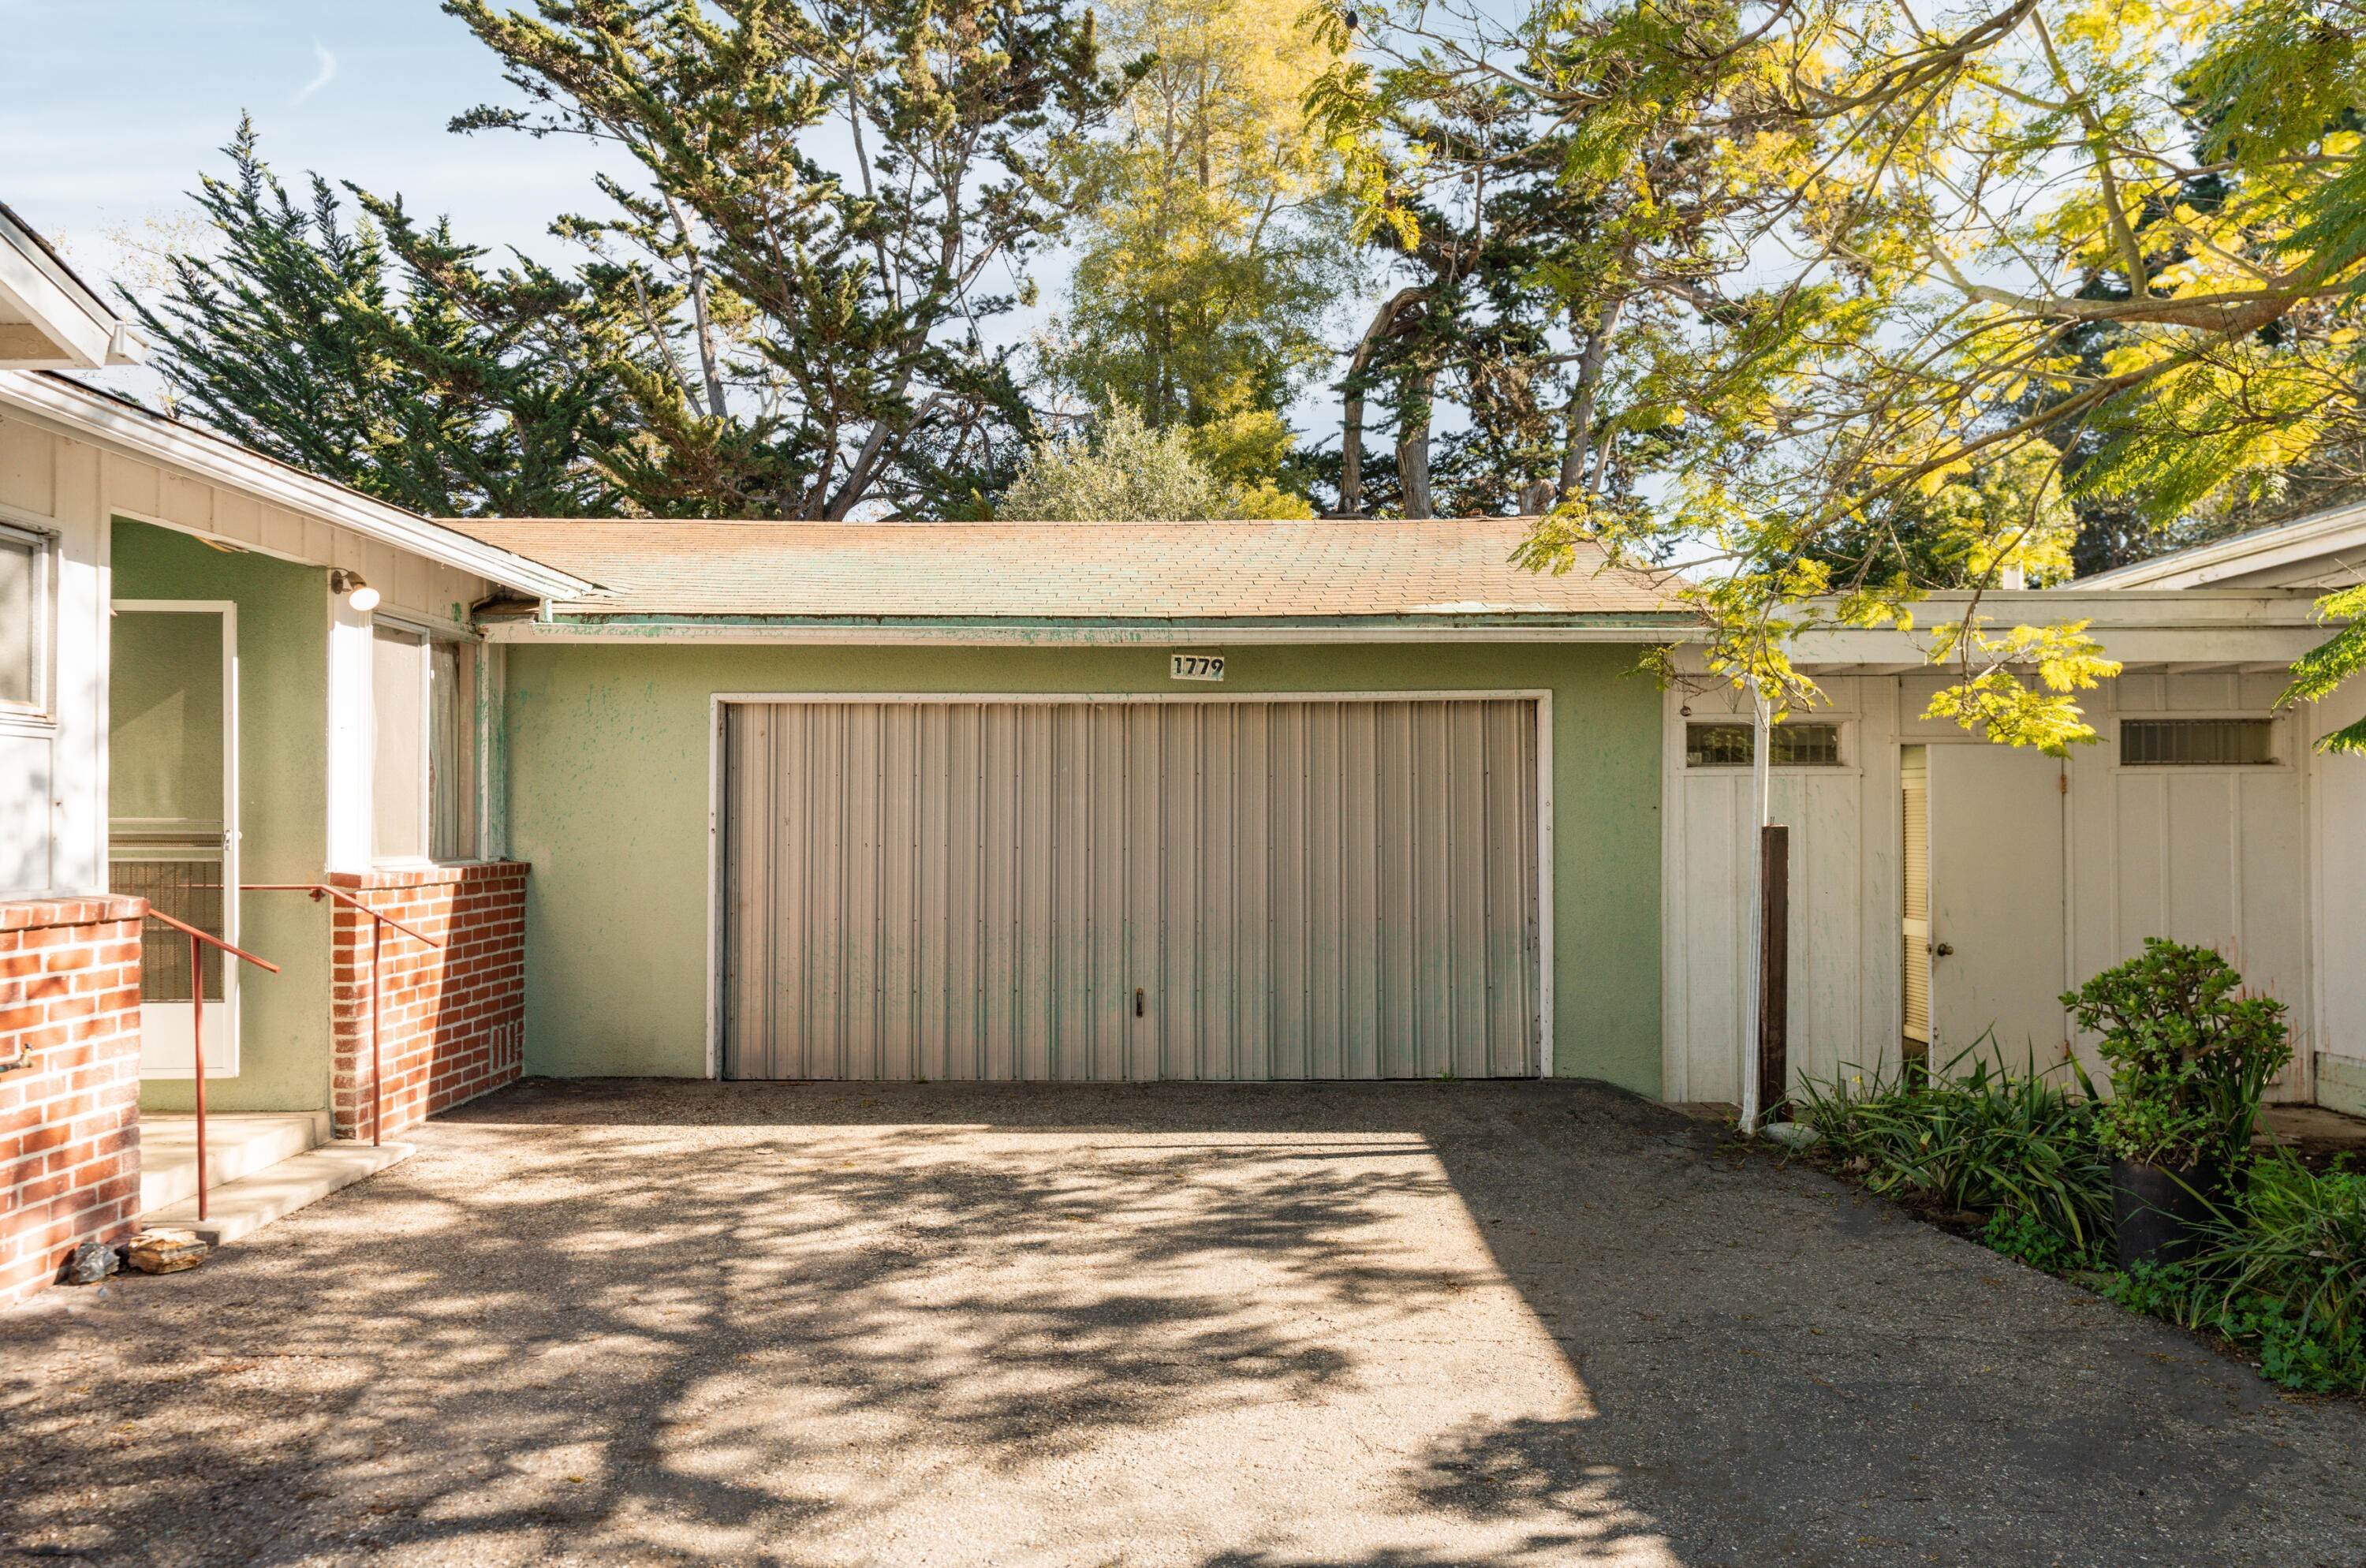 15. Estate for Sale at 1779 San Leandro Santa Barbara, California 93108 United States